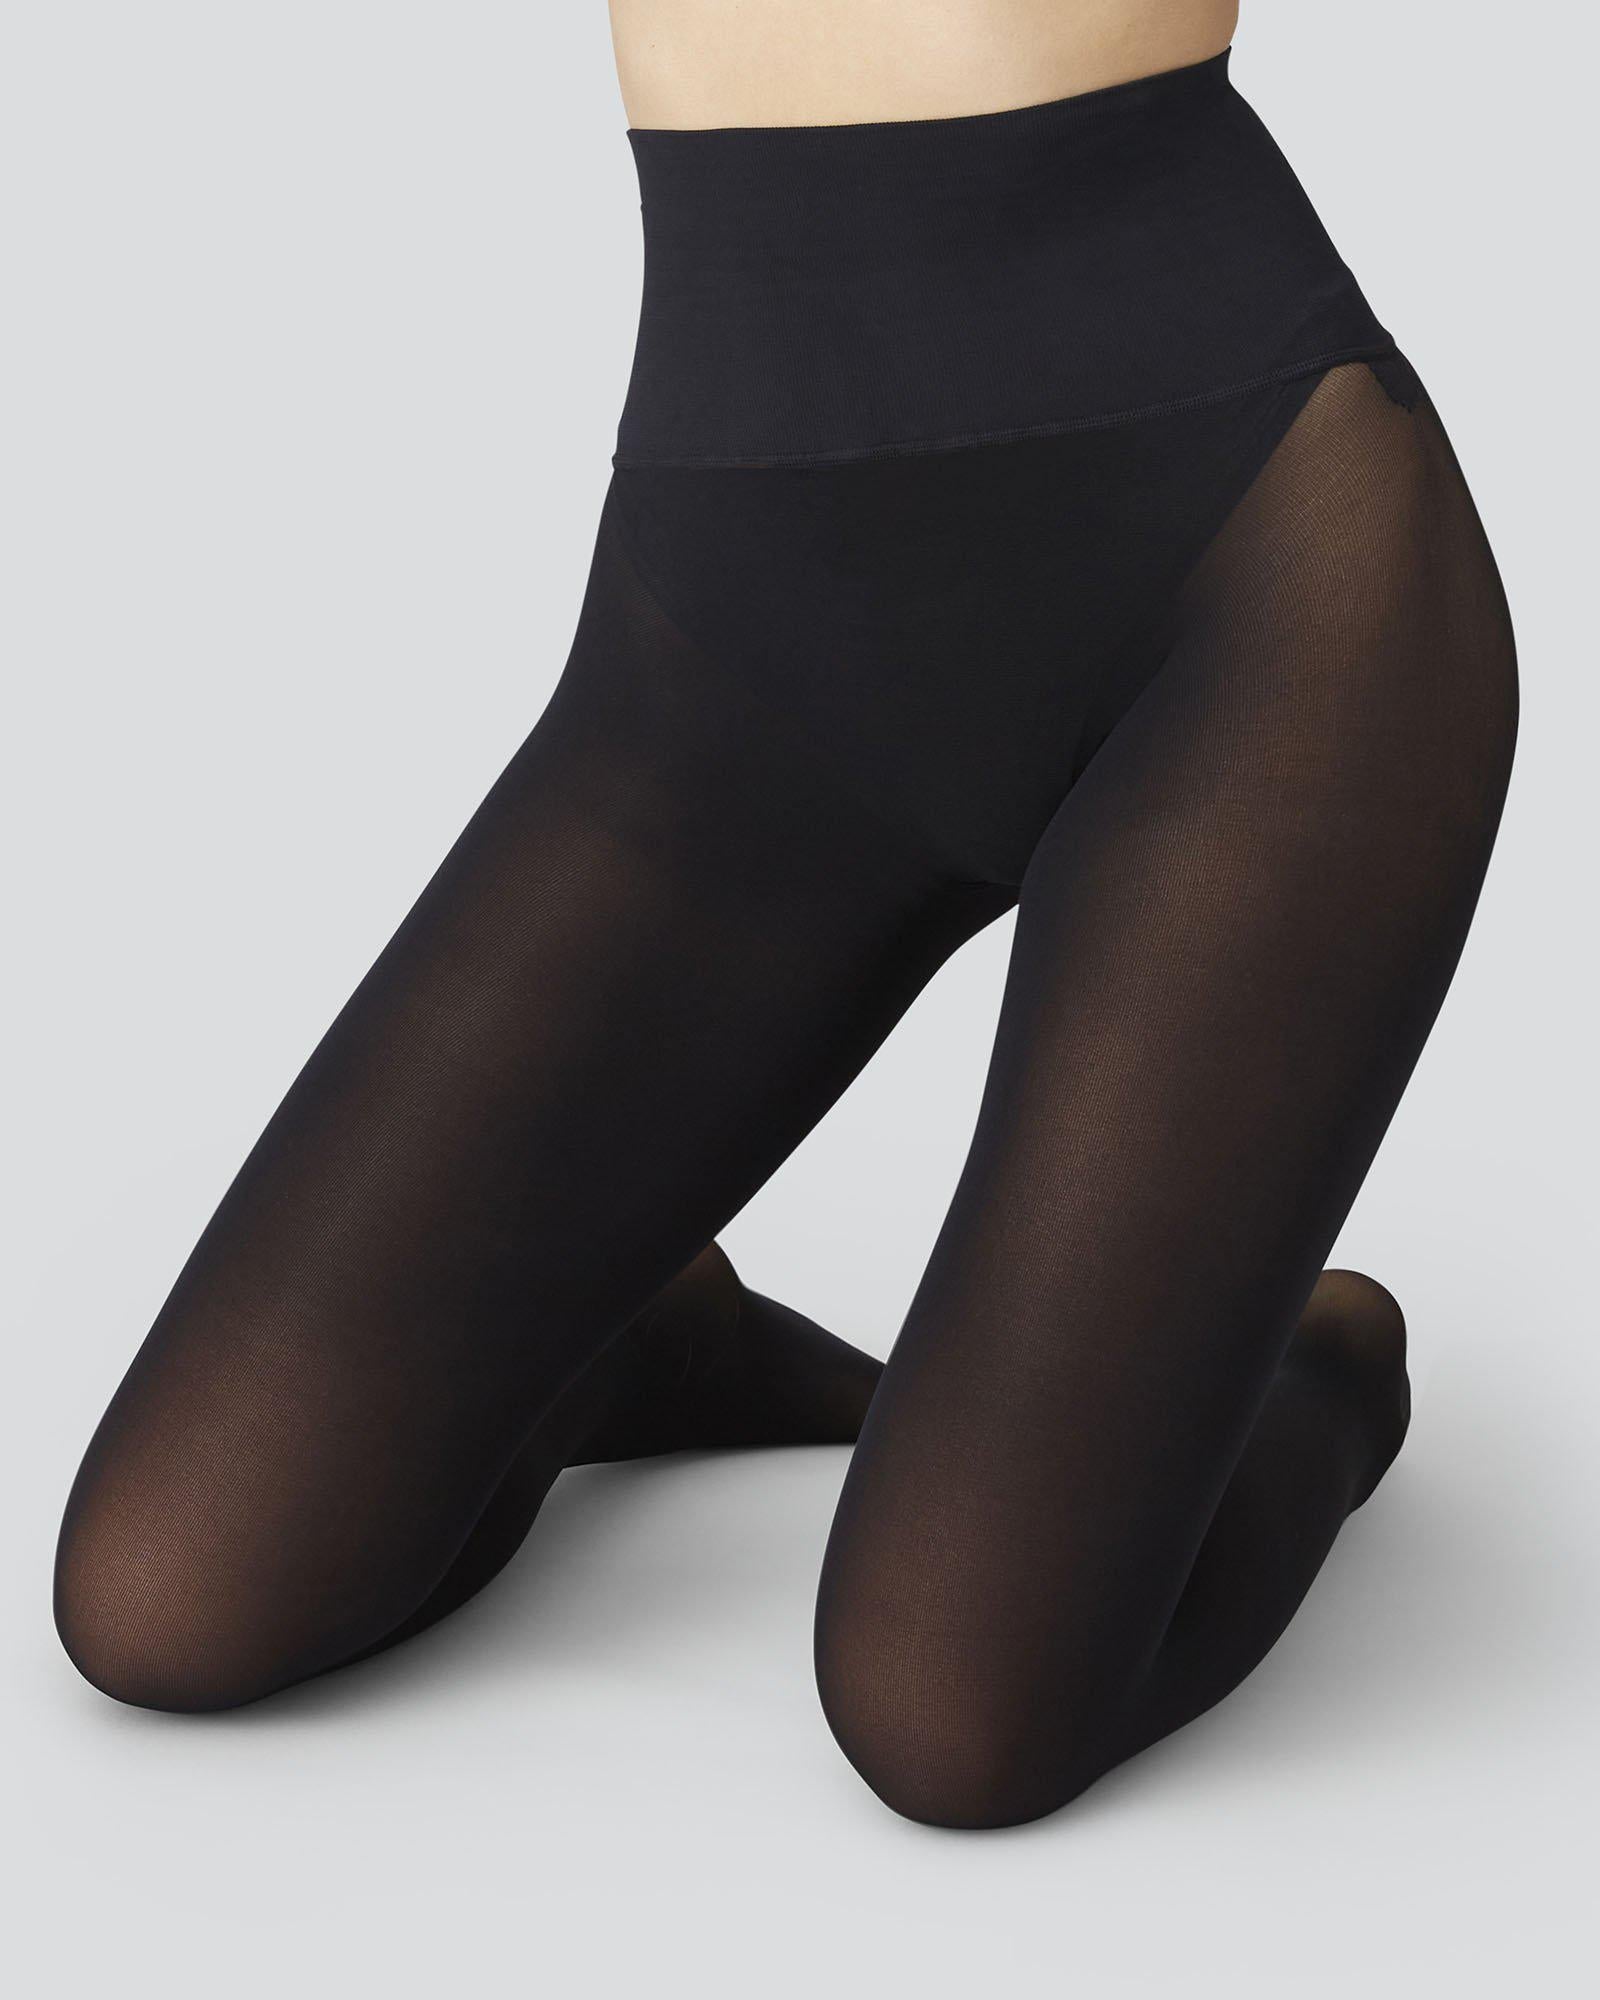 Lamuusaa Women's Stockings, Love Printing, Hollow Mesh Design, High  Elasticity, Slimming Black Tights